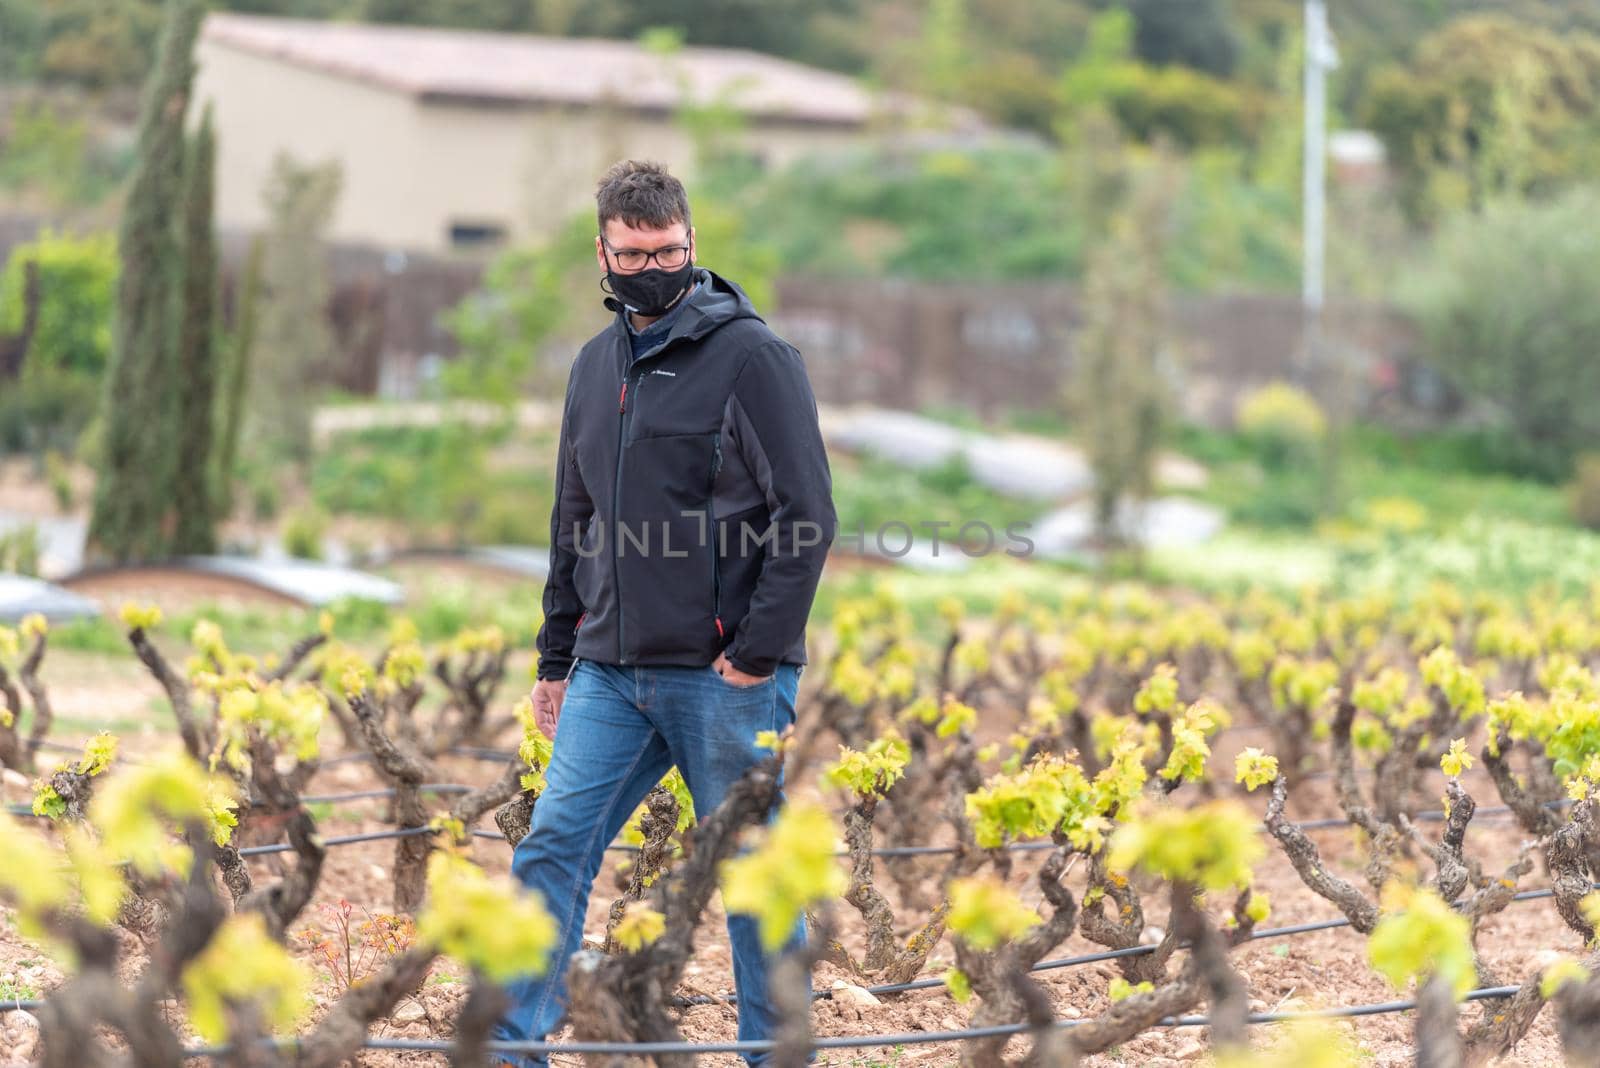 Vineyards in the La Rioja region of Spain in 2021 by martinscphoto